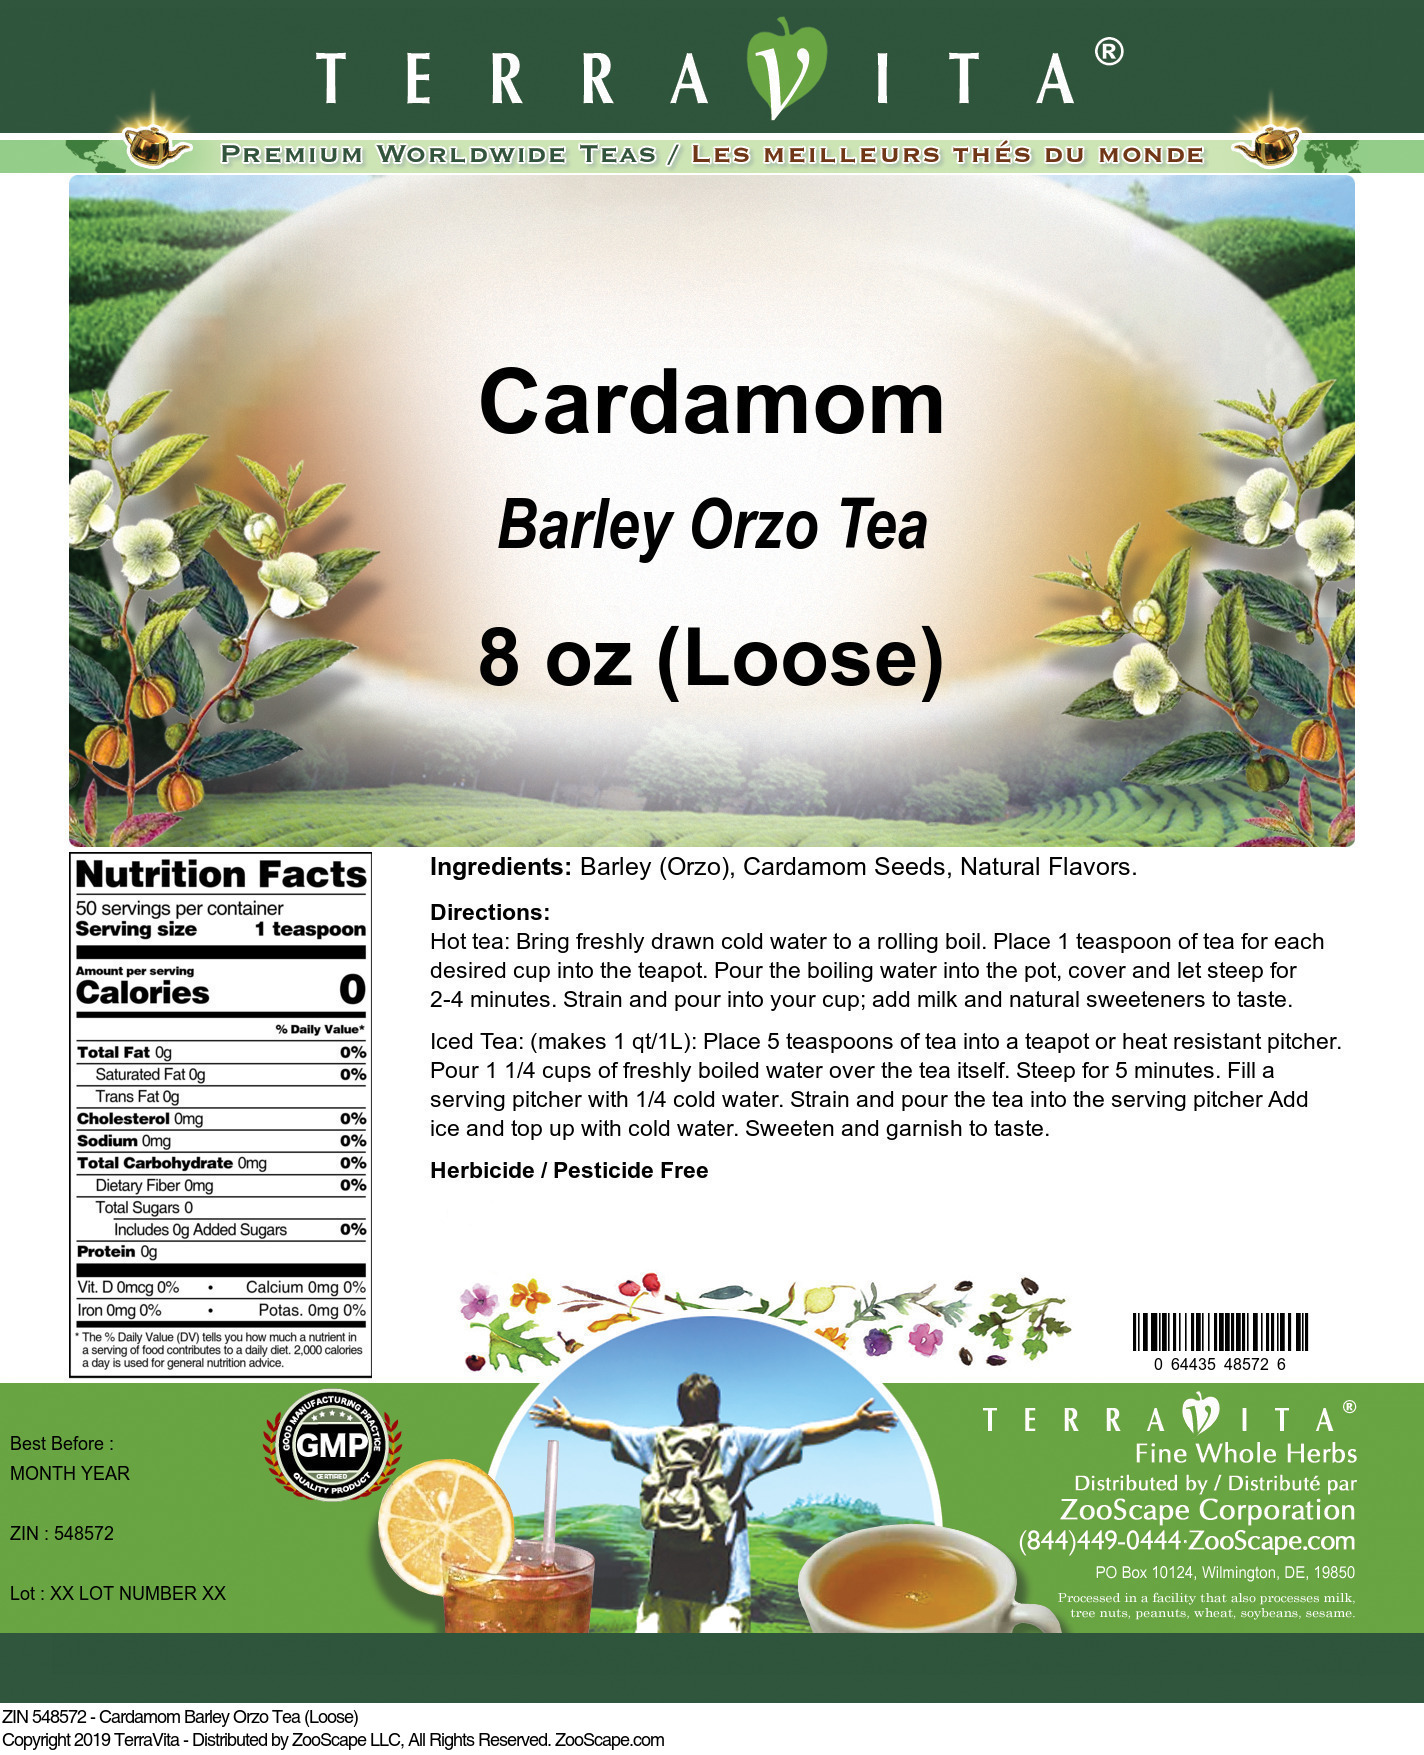 Cardamom Barley Orzo Tea (Loose) - Label